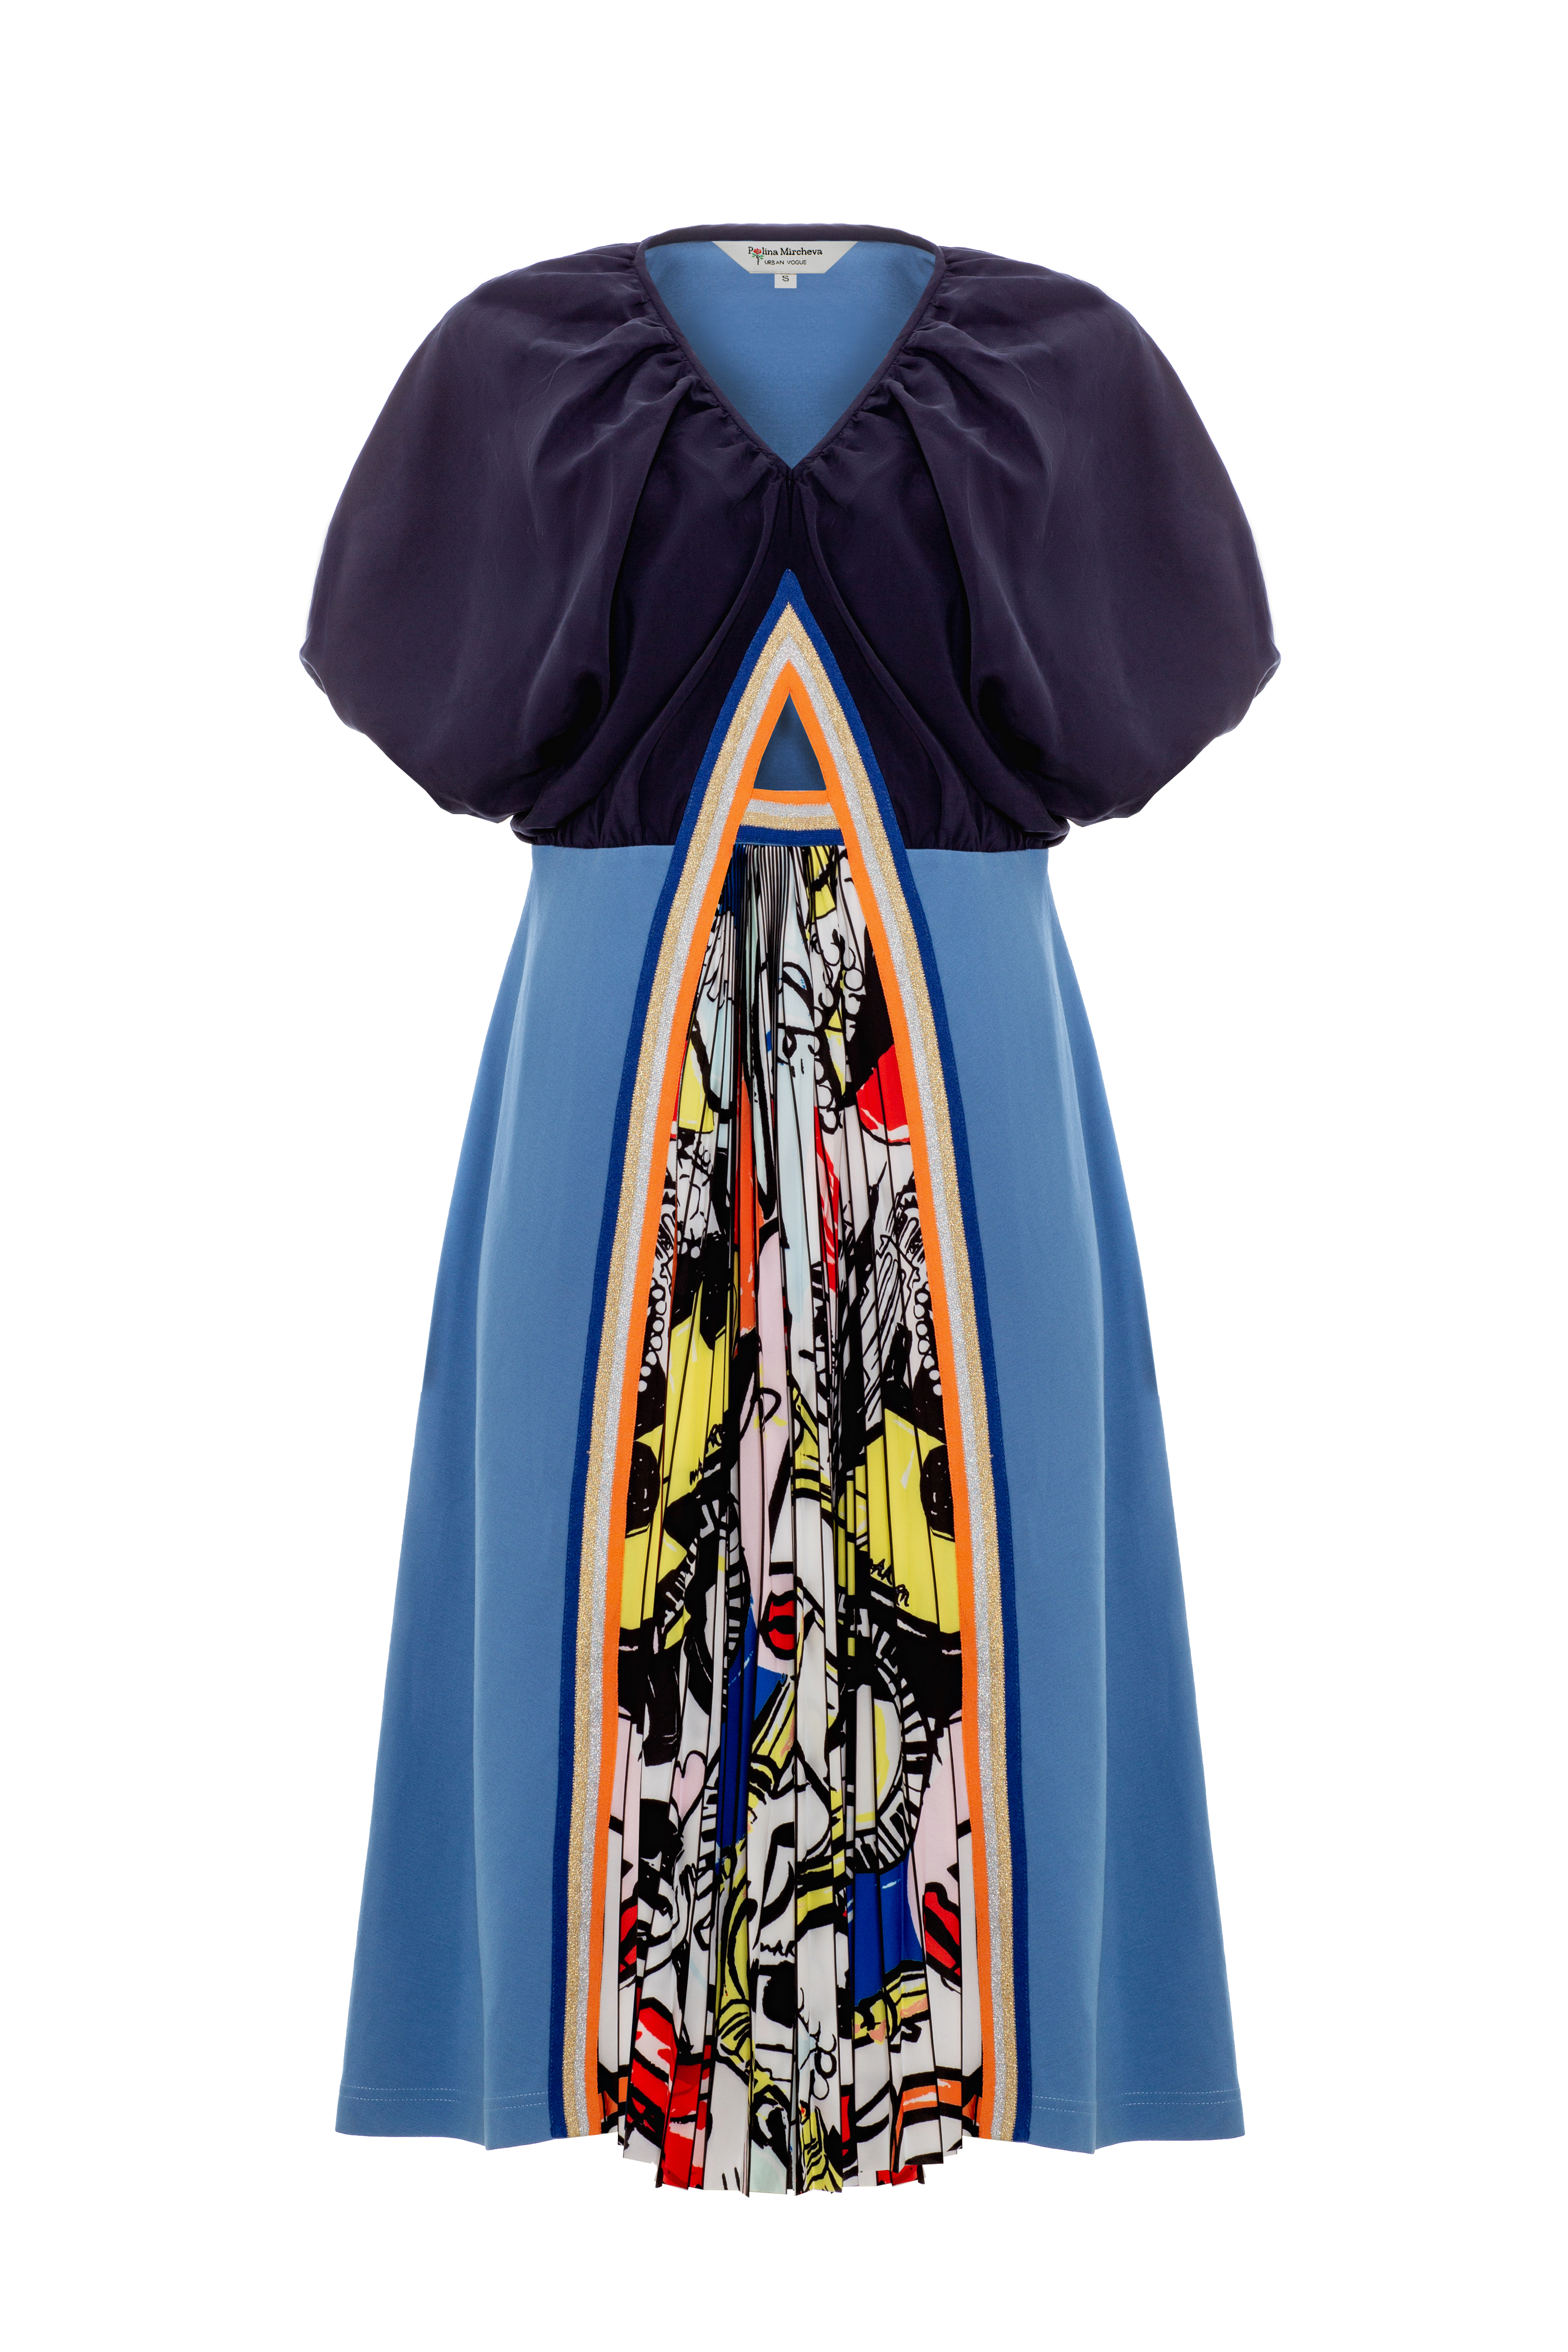 Navy blue pleated dress